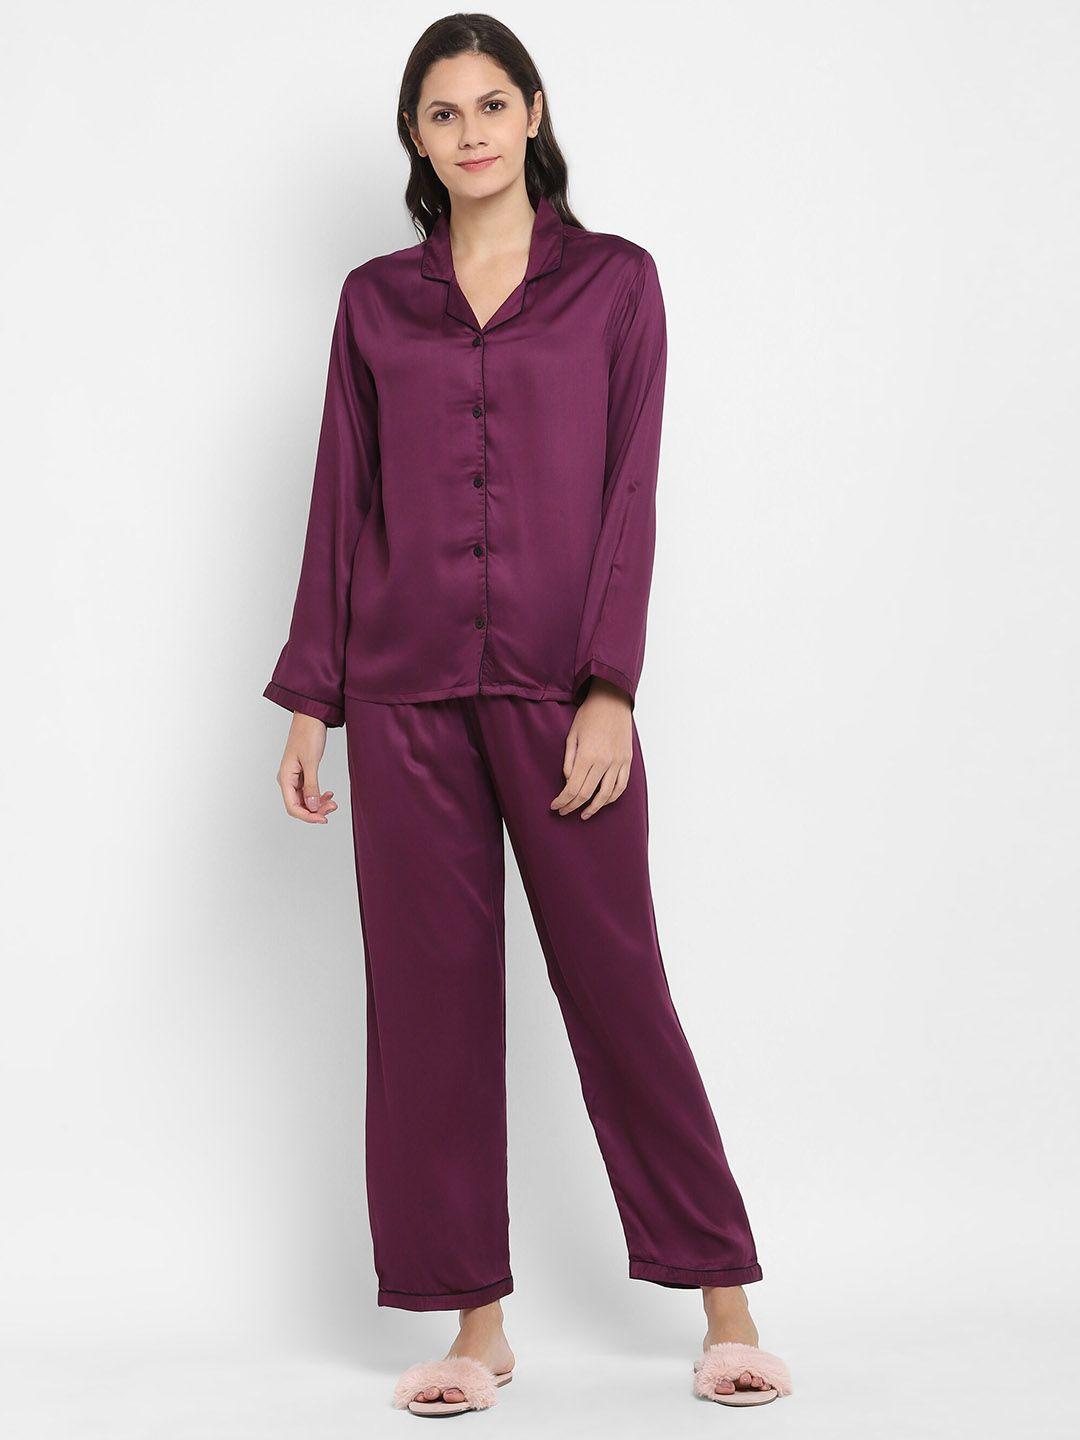 shopbloom Lapel Collar Ultra Soft Satin Night suit